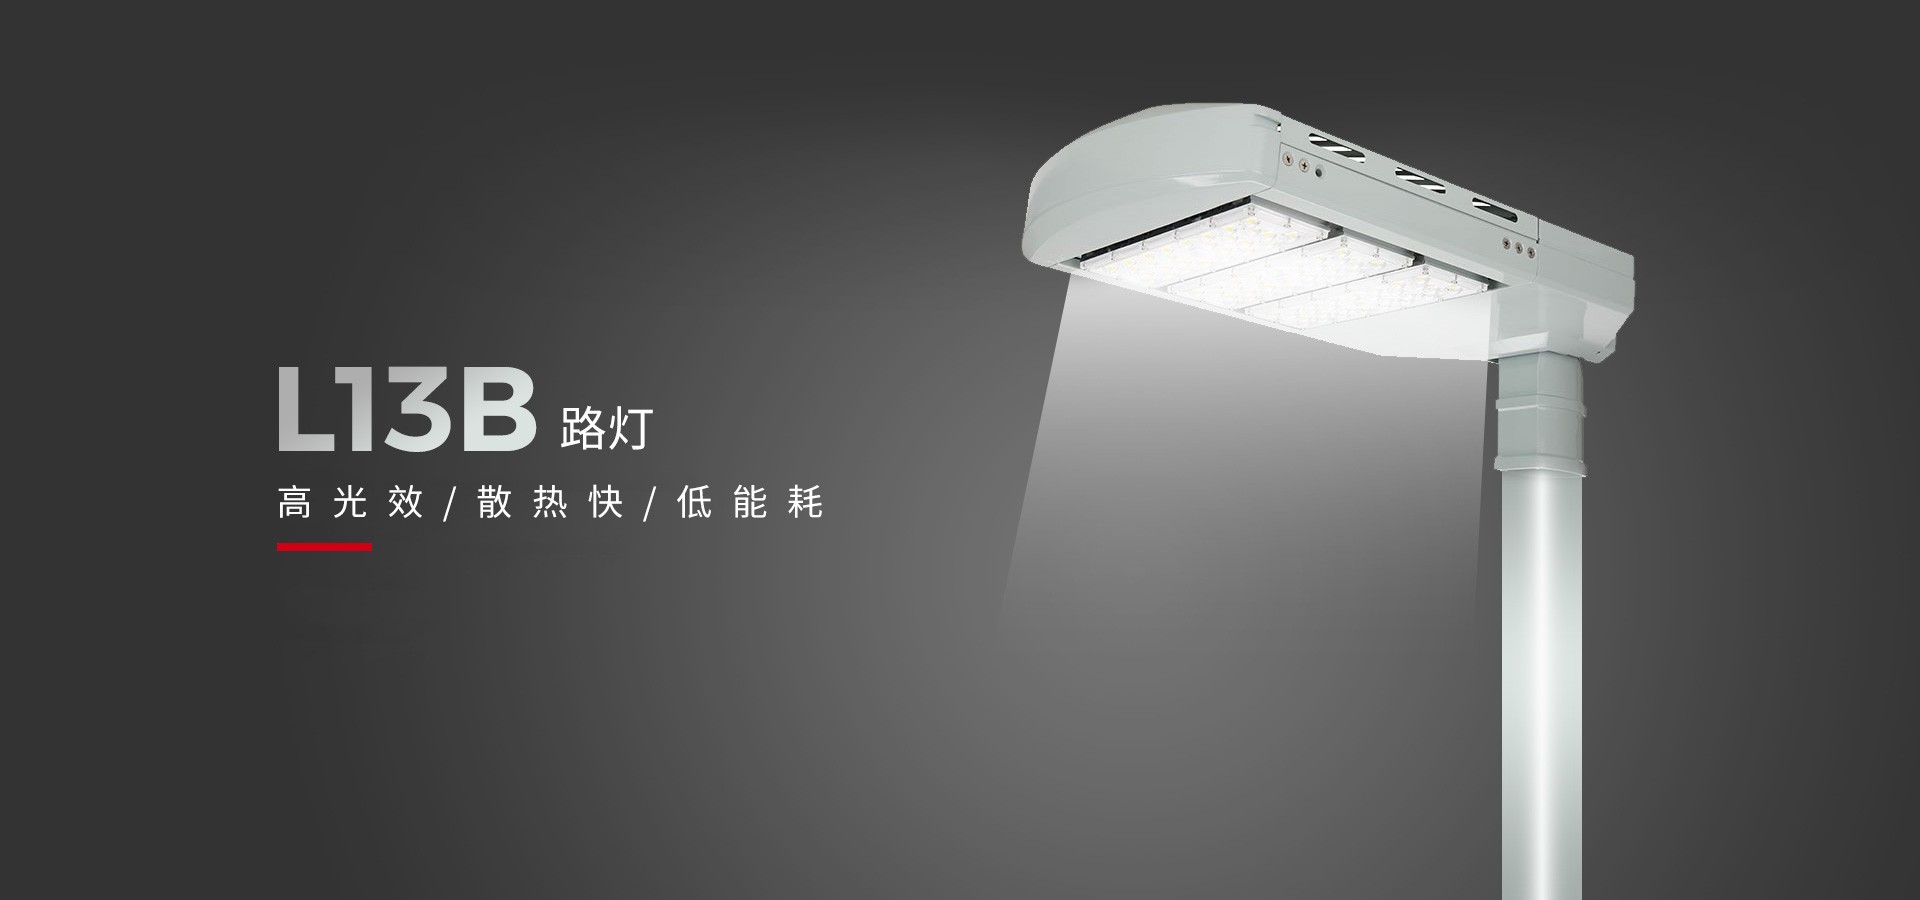 w66利来国际最给利的老牌光电 I 节能之光LED路灯L13B 点亮低碳新视界！